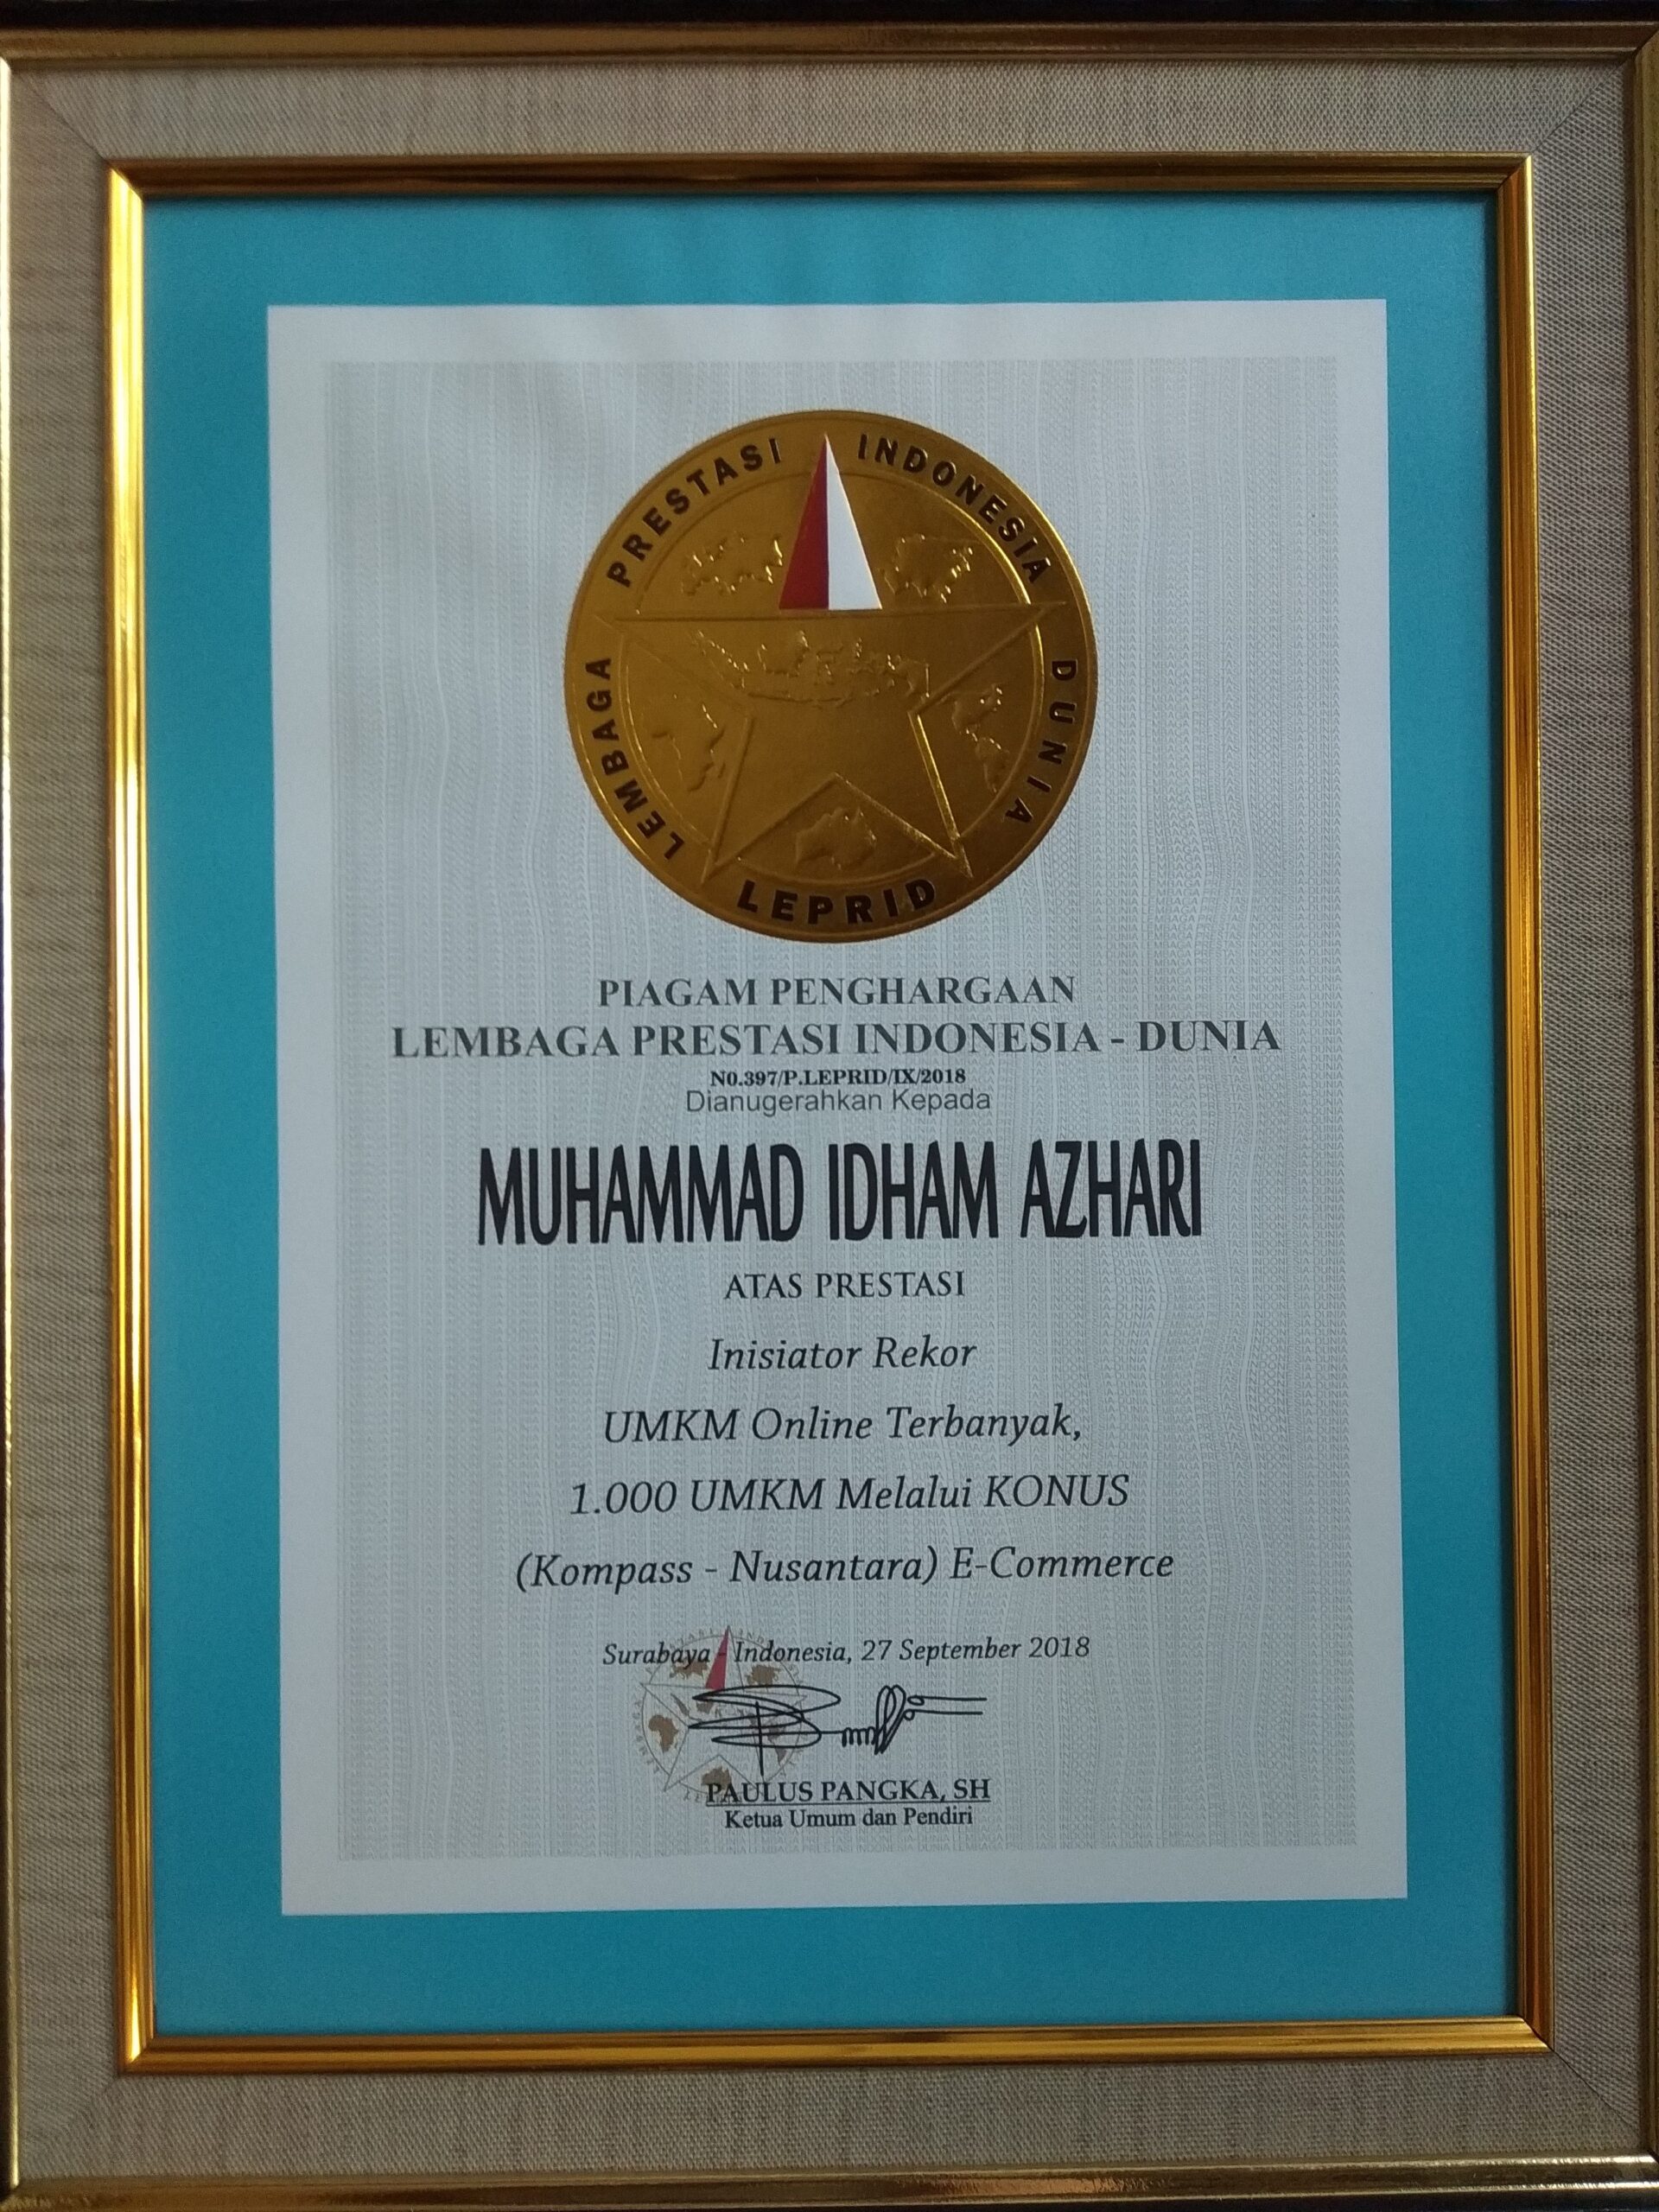 Penghargaan LEPRID Muhammad Idham Azhari (Dewan Penasehat)